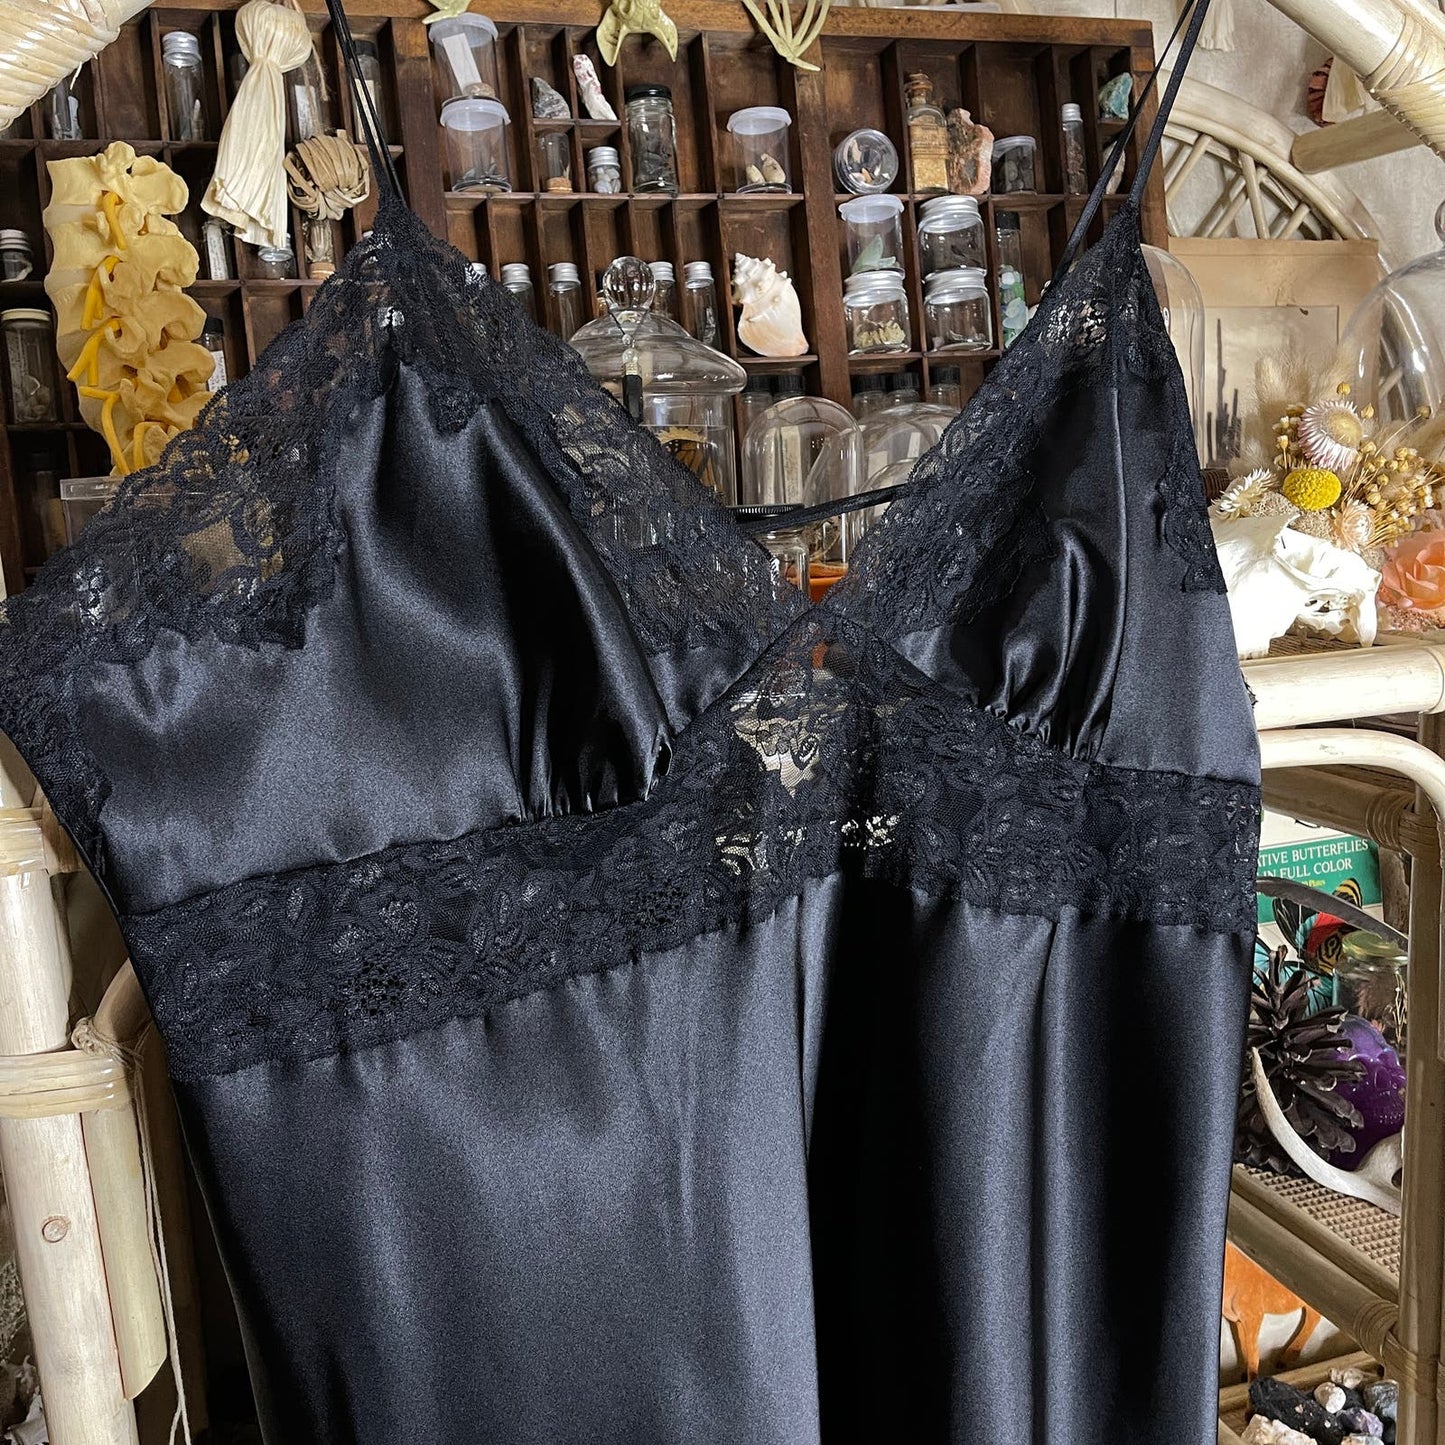 Fredericks of Hollywood Black Satin Nightie Slip Dress Lace Trim Volup Size 3X